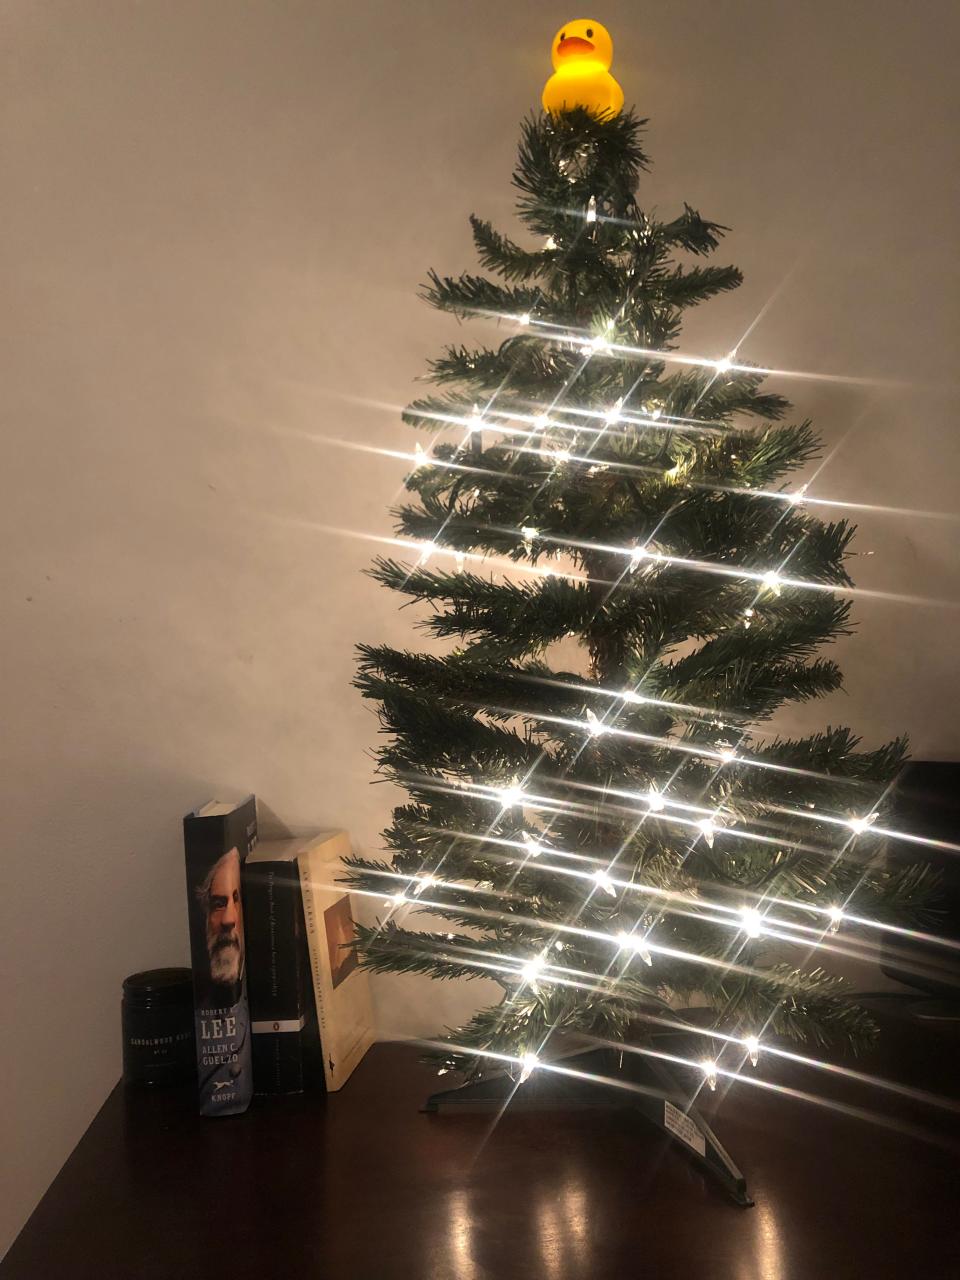 Abigail's Christmas tree, 2021.